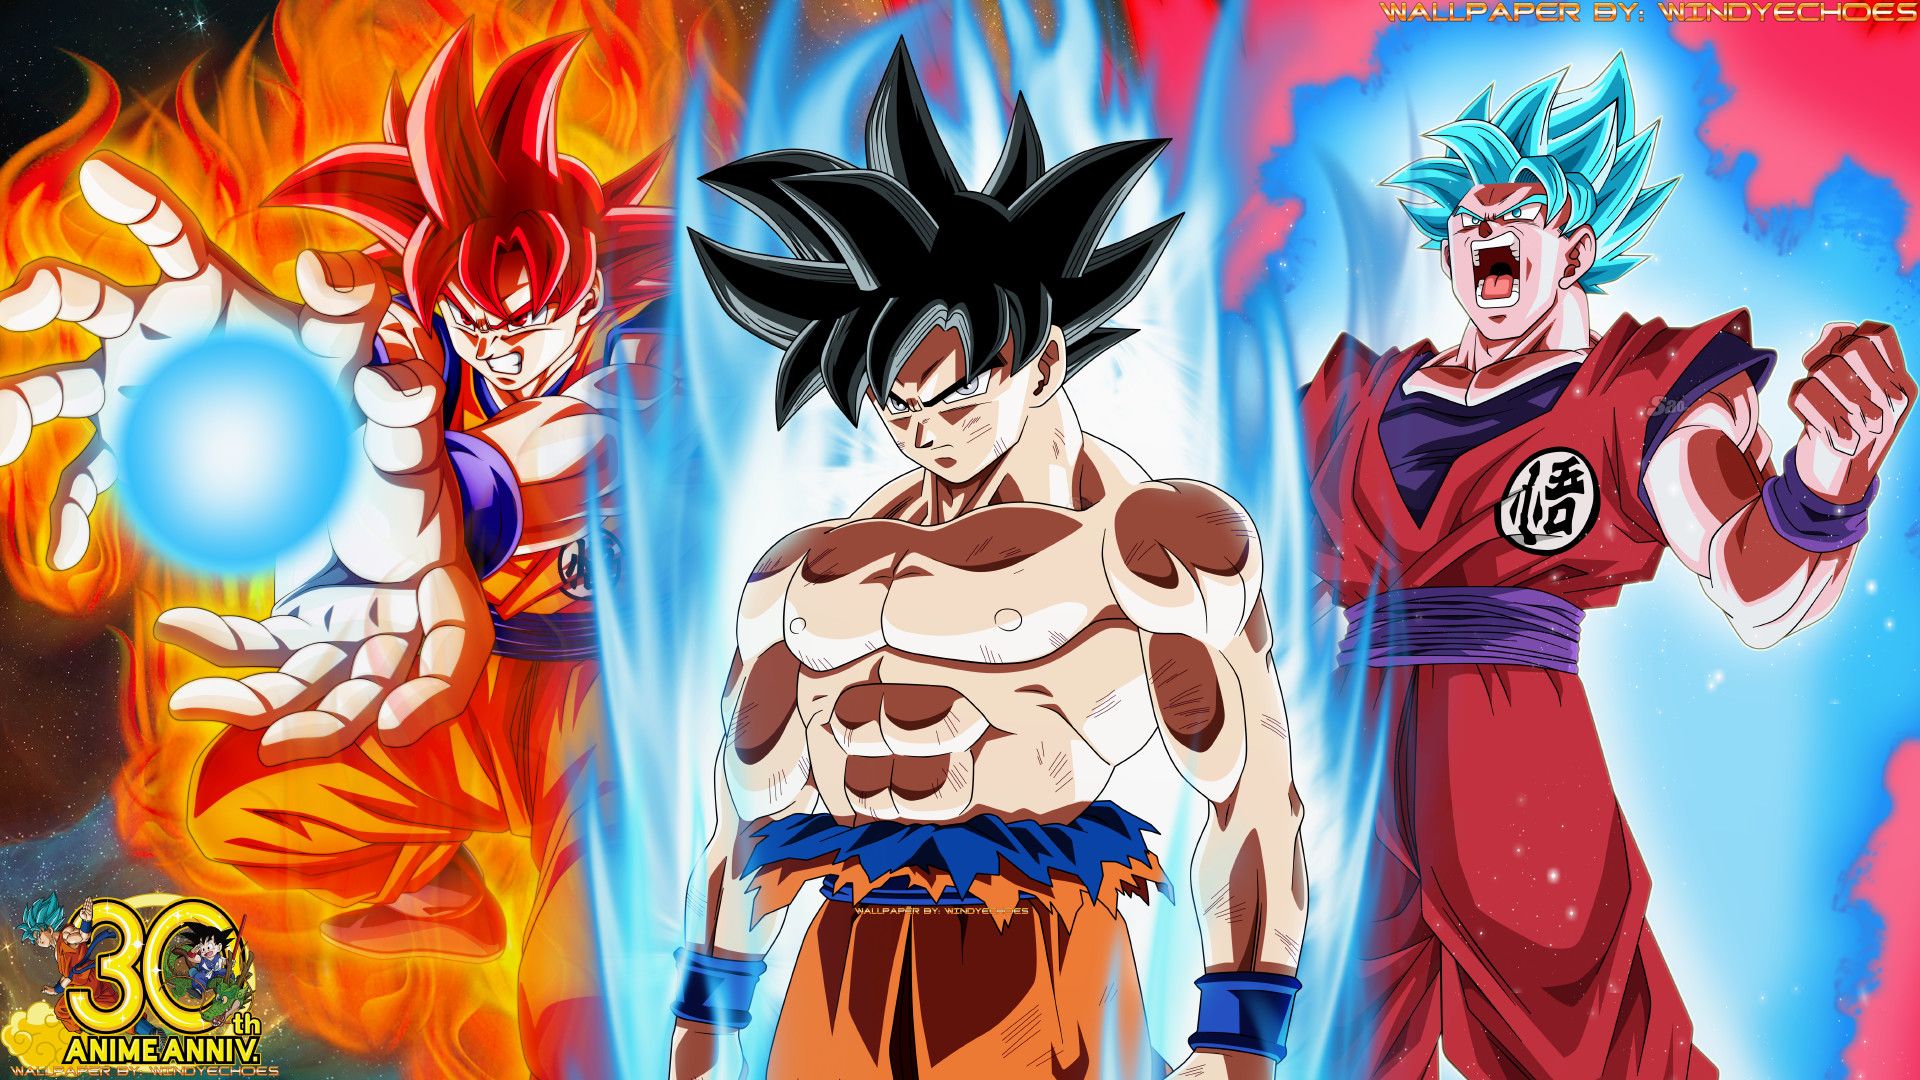 Goku Super Saiyan God Wallpaper